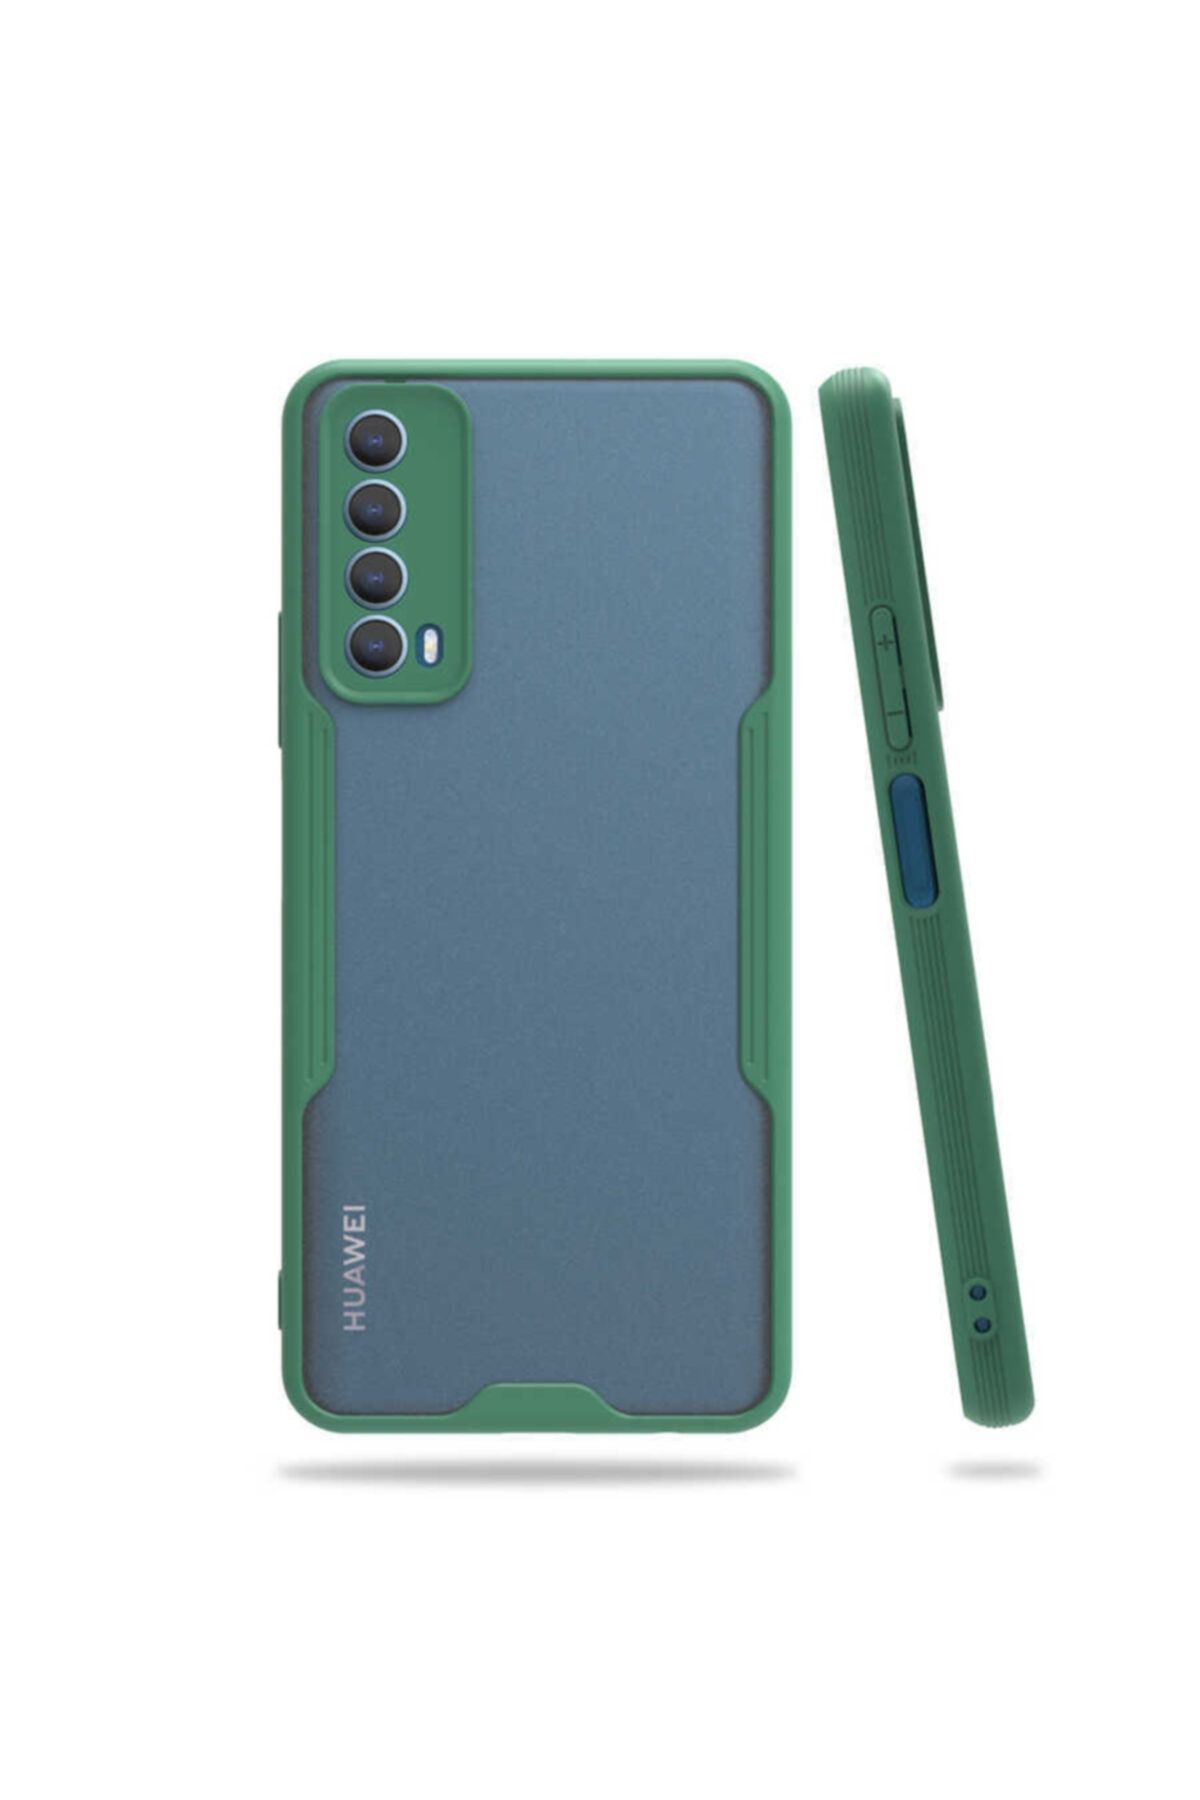 İncisoft Huawei P Smart 2021 Uyumlu Renkli Çerçeve Mat Şeffaf Parfe Kapak Yeşil Kılıf